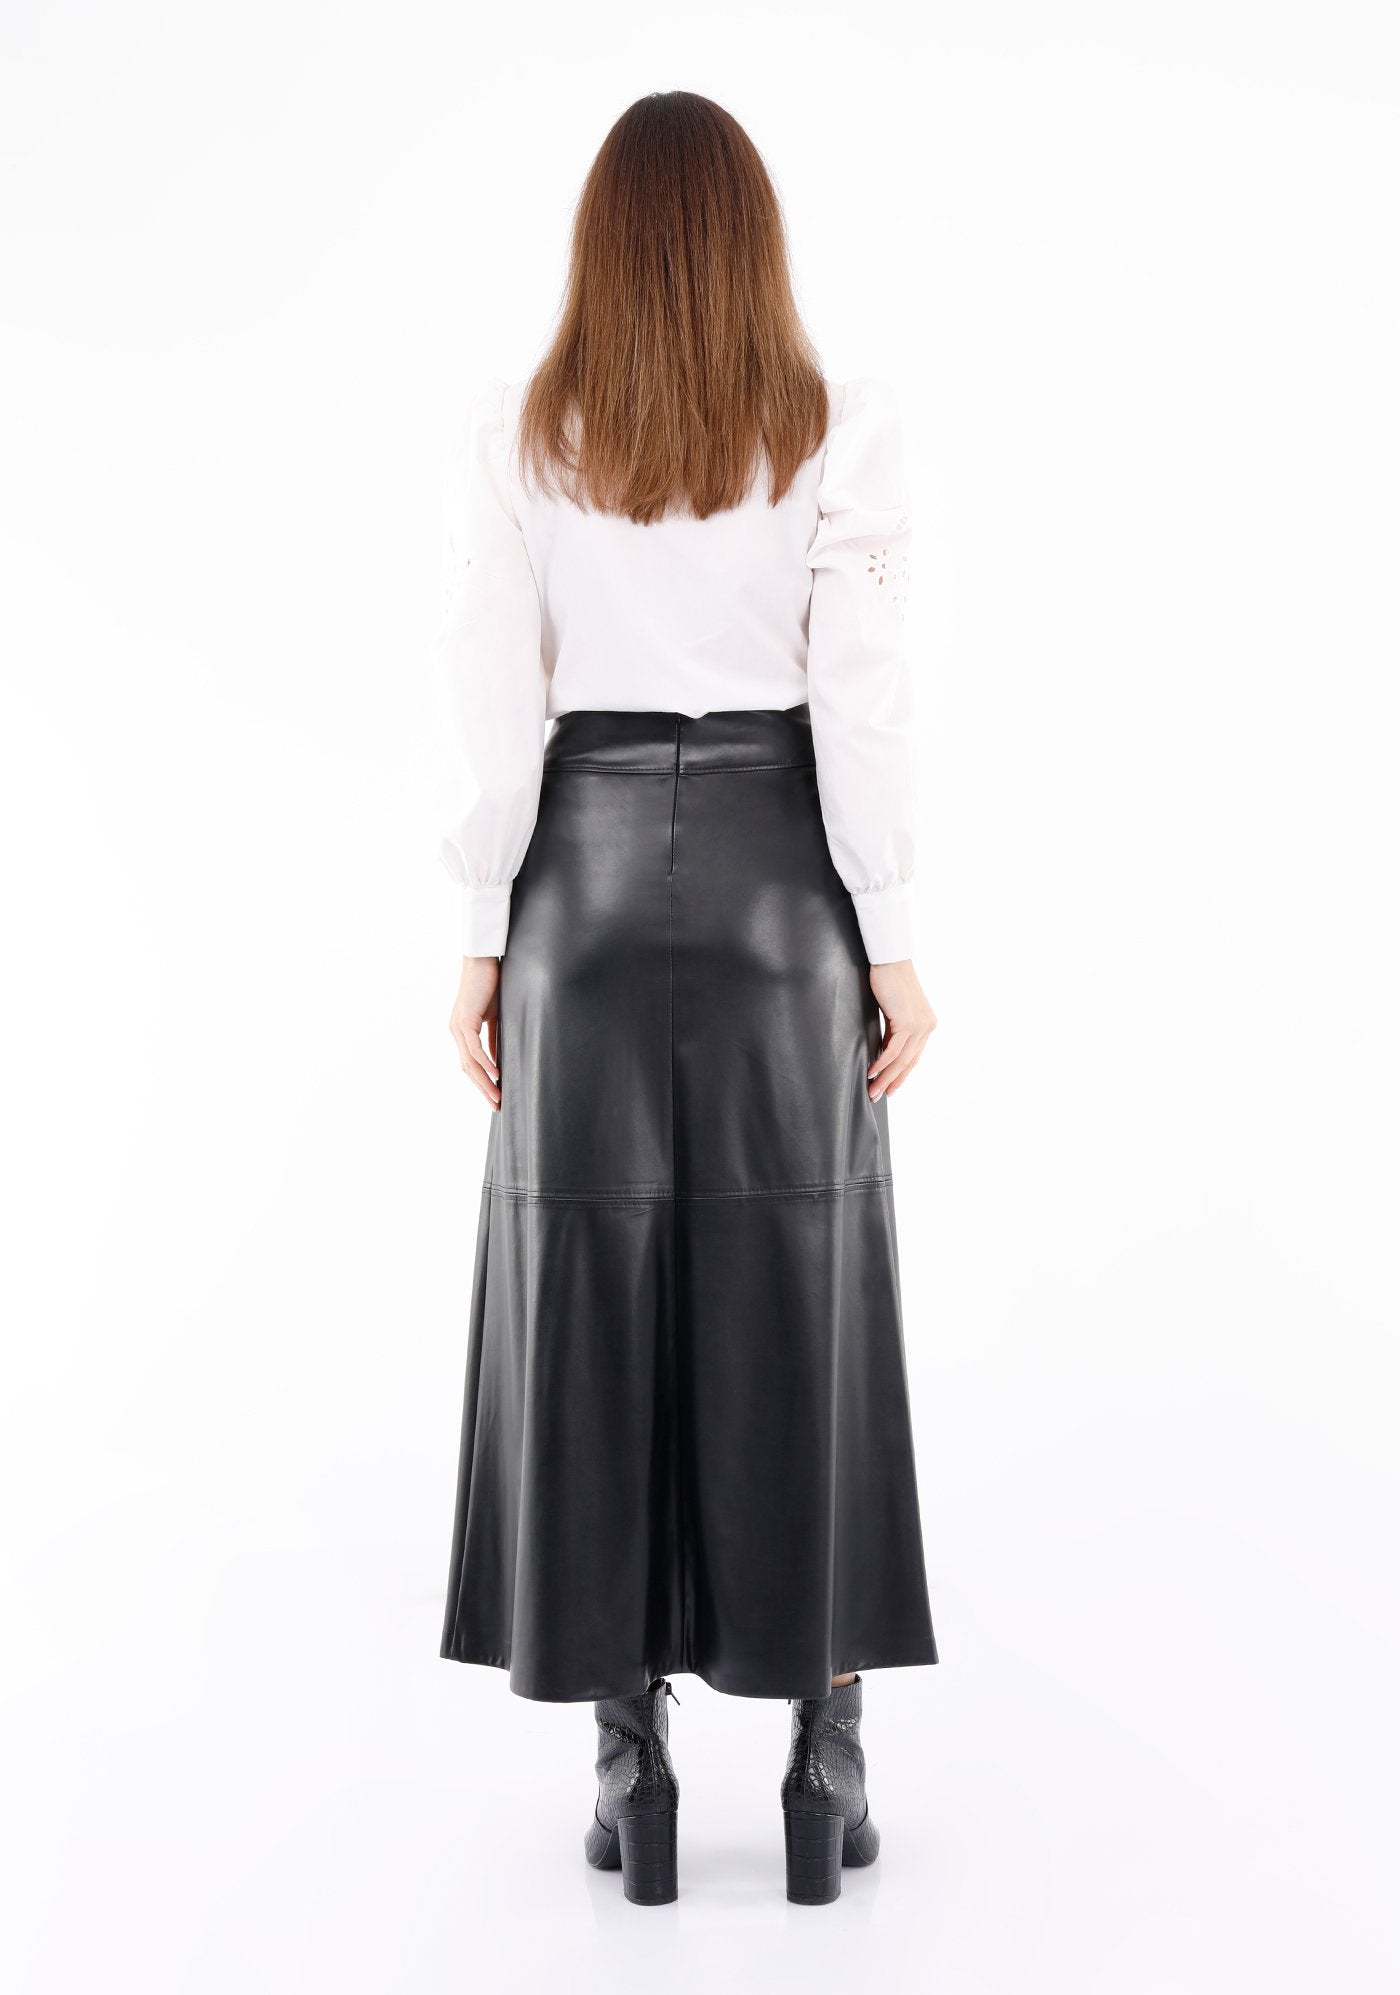 Vegan Leather Maxi Black Skirt with Pockets and Metal Accessories Around Waist Guzella